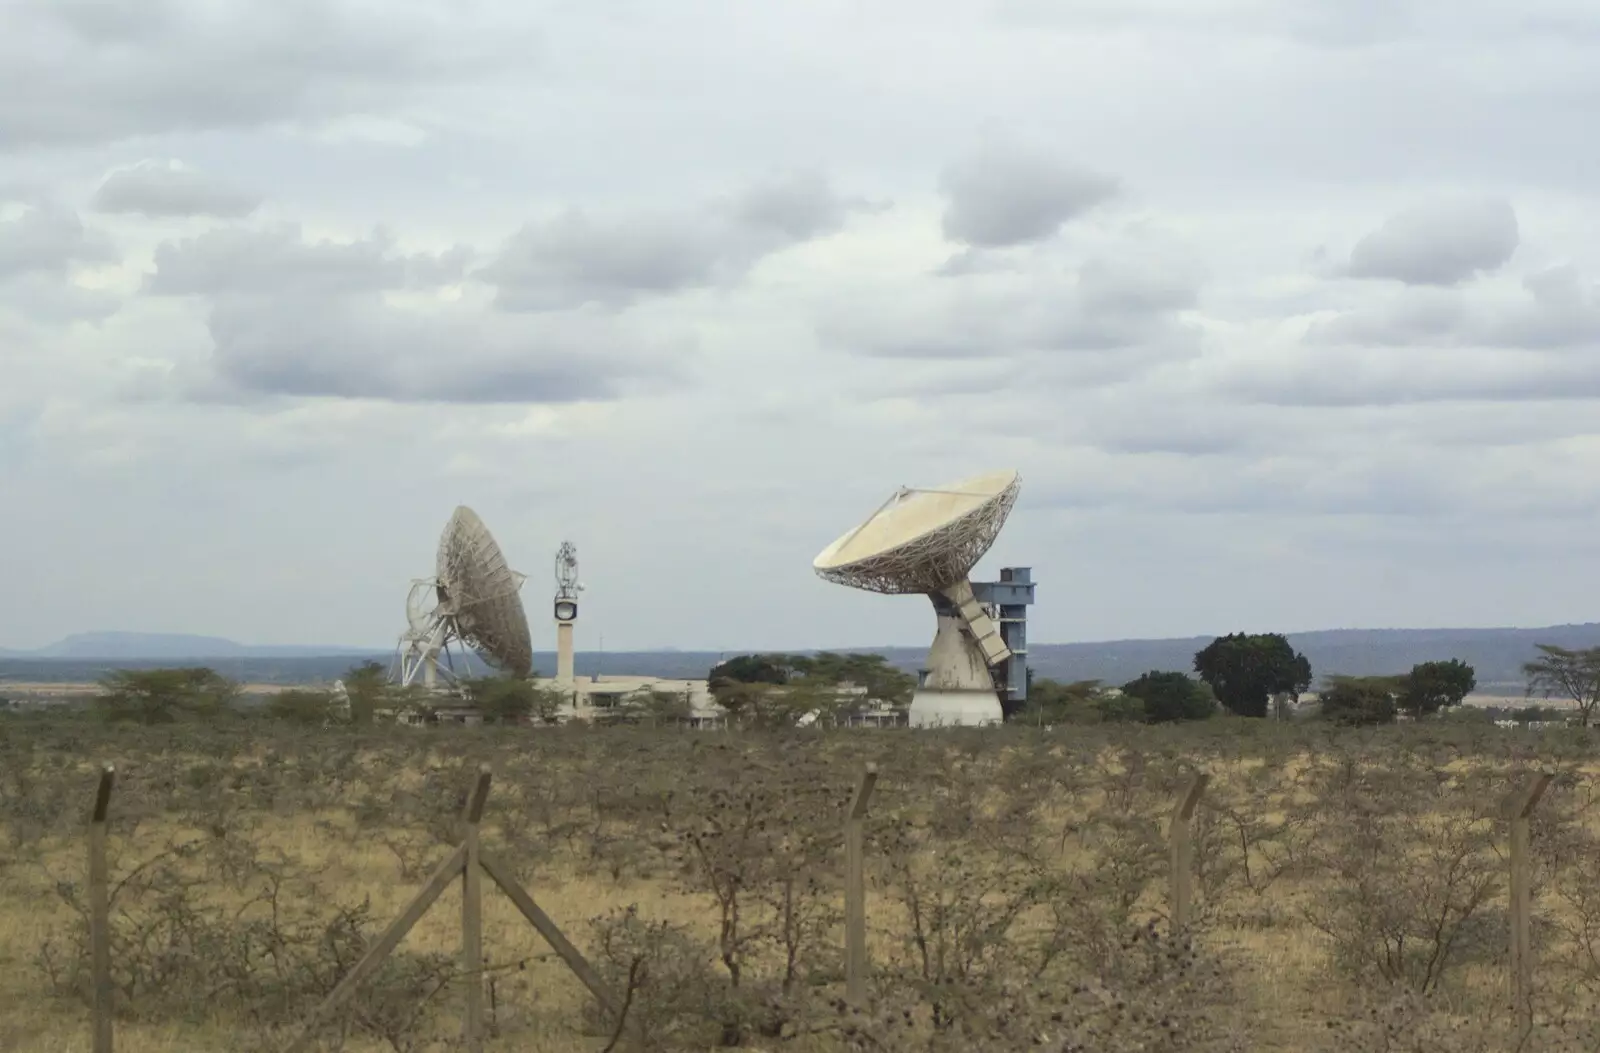 Some sort of satellite ground station, from Nairobi and the Road to Maasai Mara, Kenya, Africa - 1st November 2010